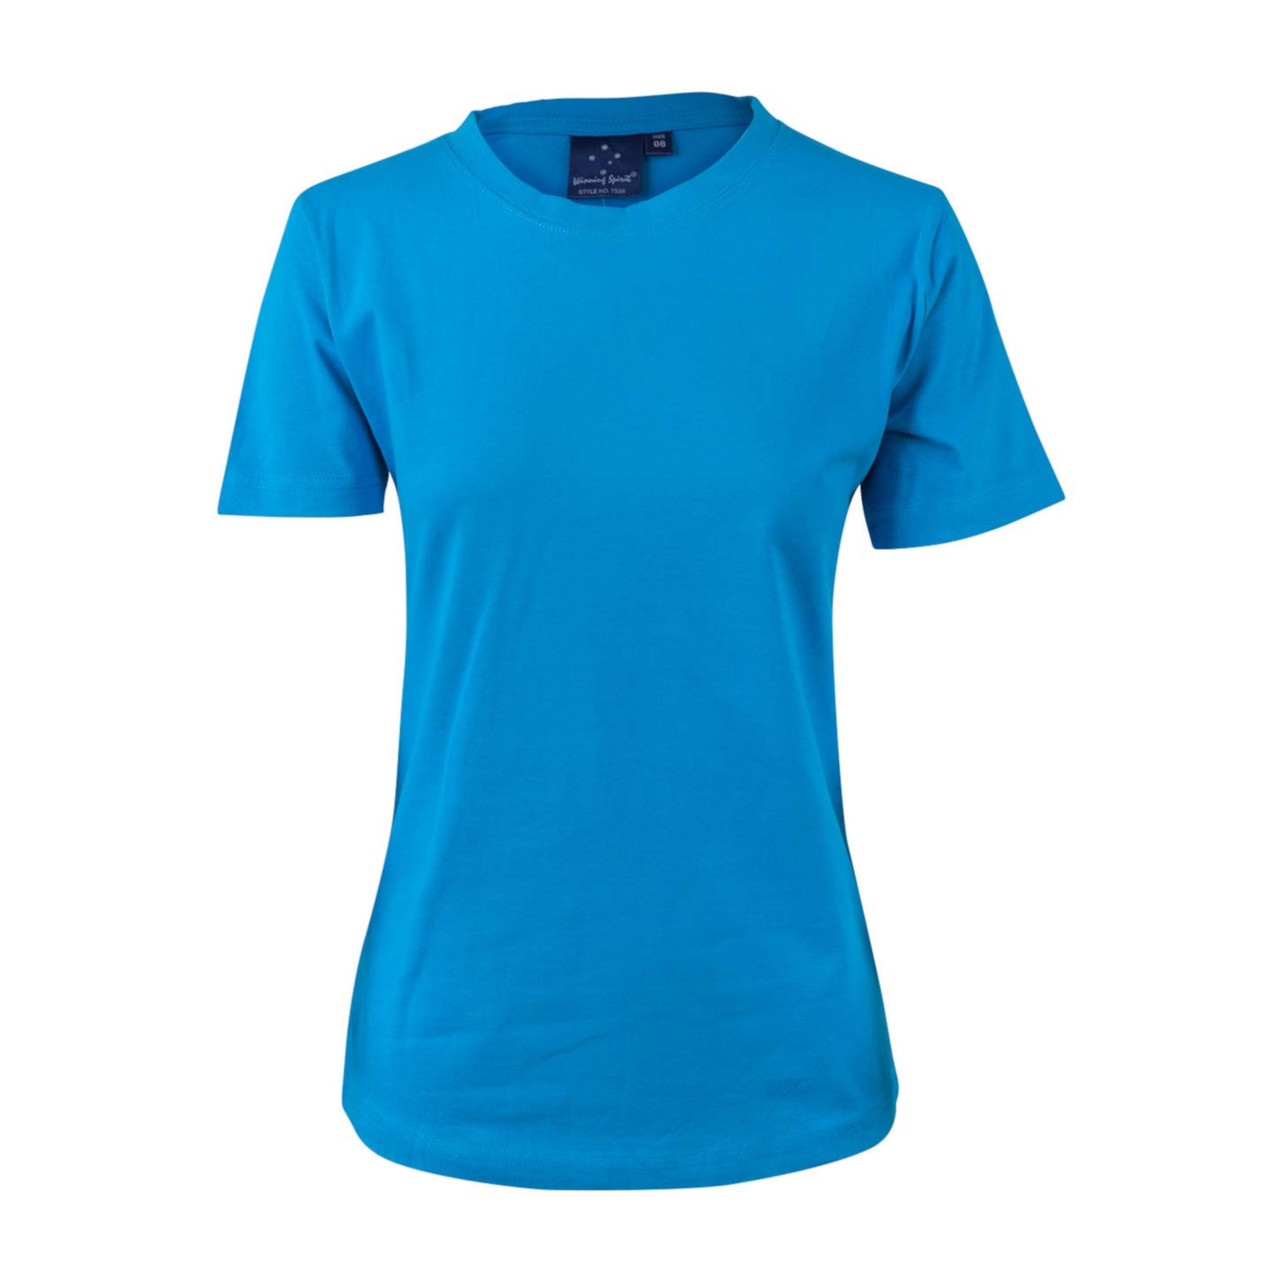 Shop 100% Cotton Semi Fitted Ladies Plain Tshirts | Blank Clothing ...